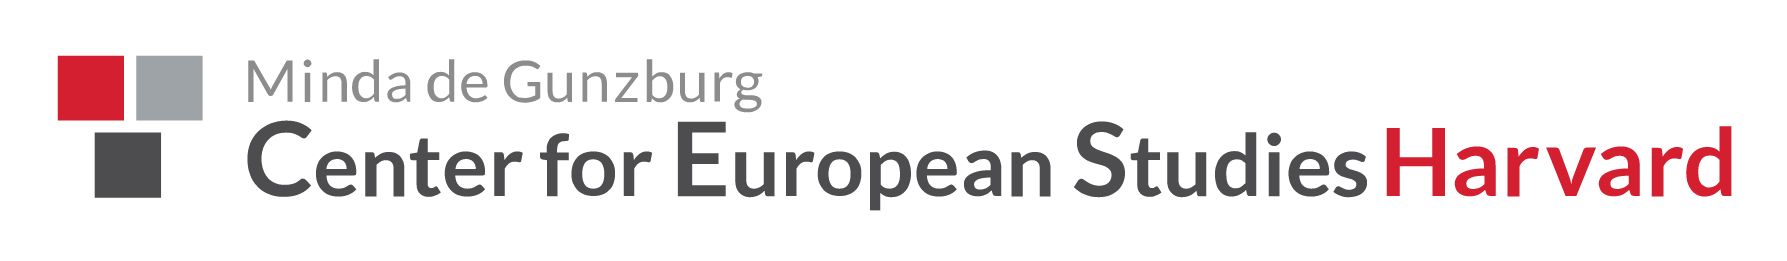 Minda de Gunzburg Center for European Studies Harvard logo